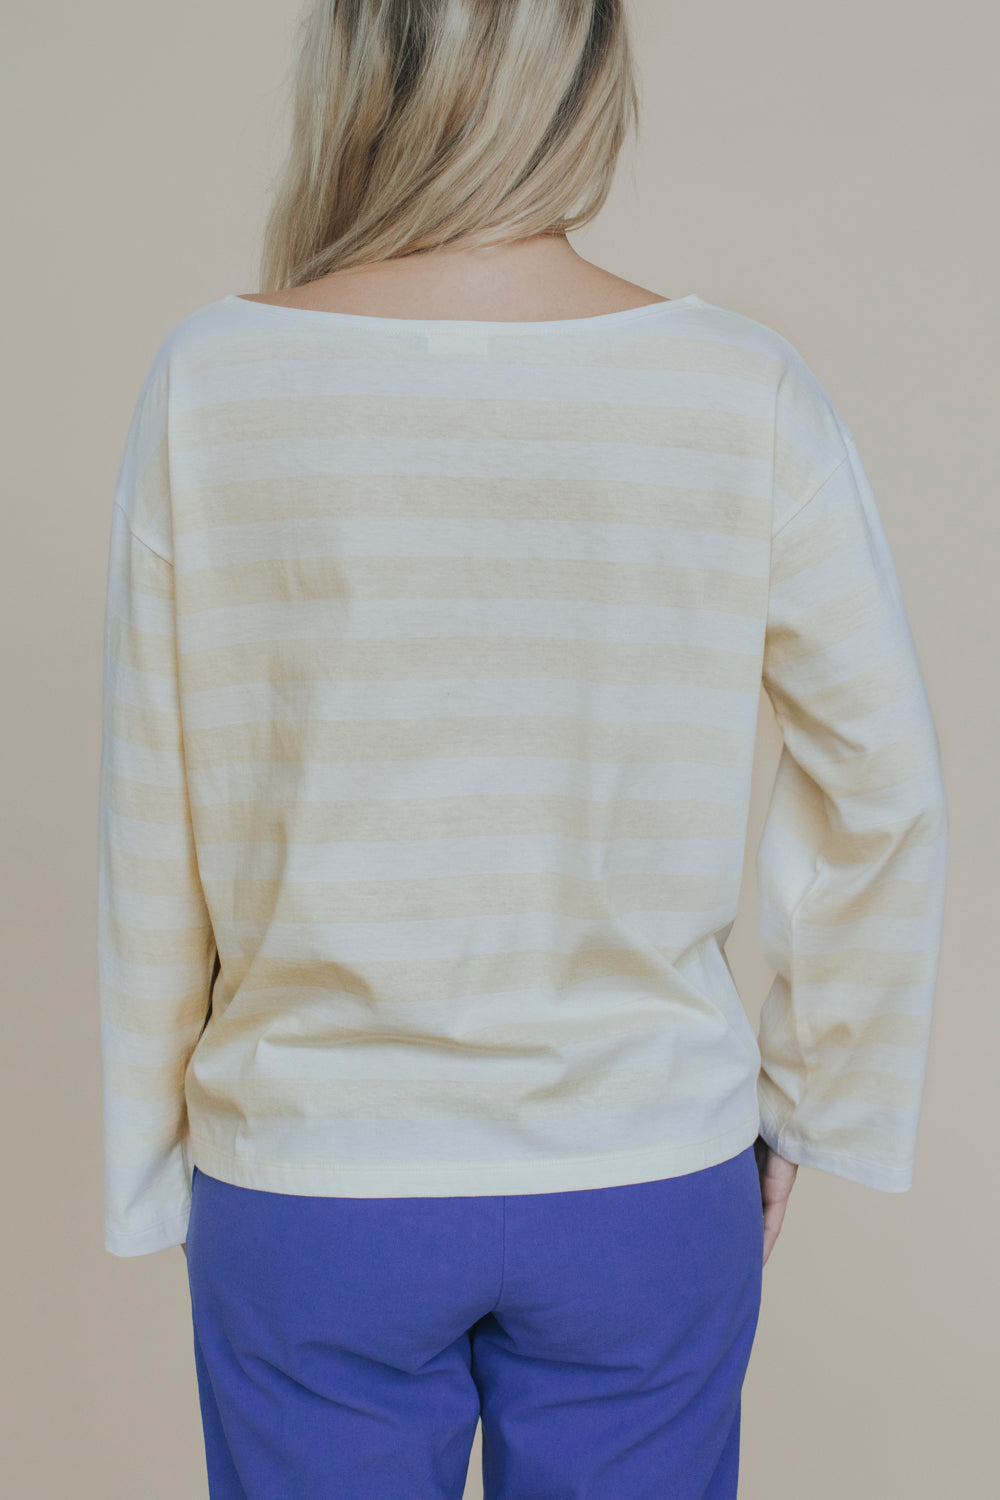 the dão store - Long Sleeve Audrey - Vanilla Stripes - T-shirts | Tops